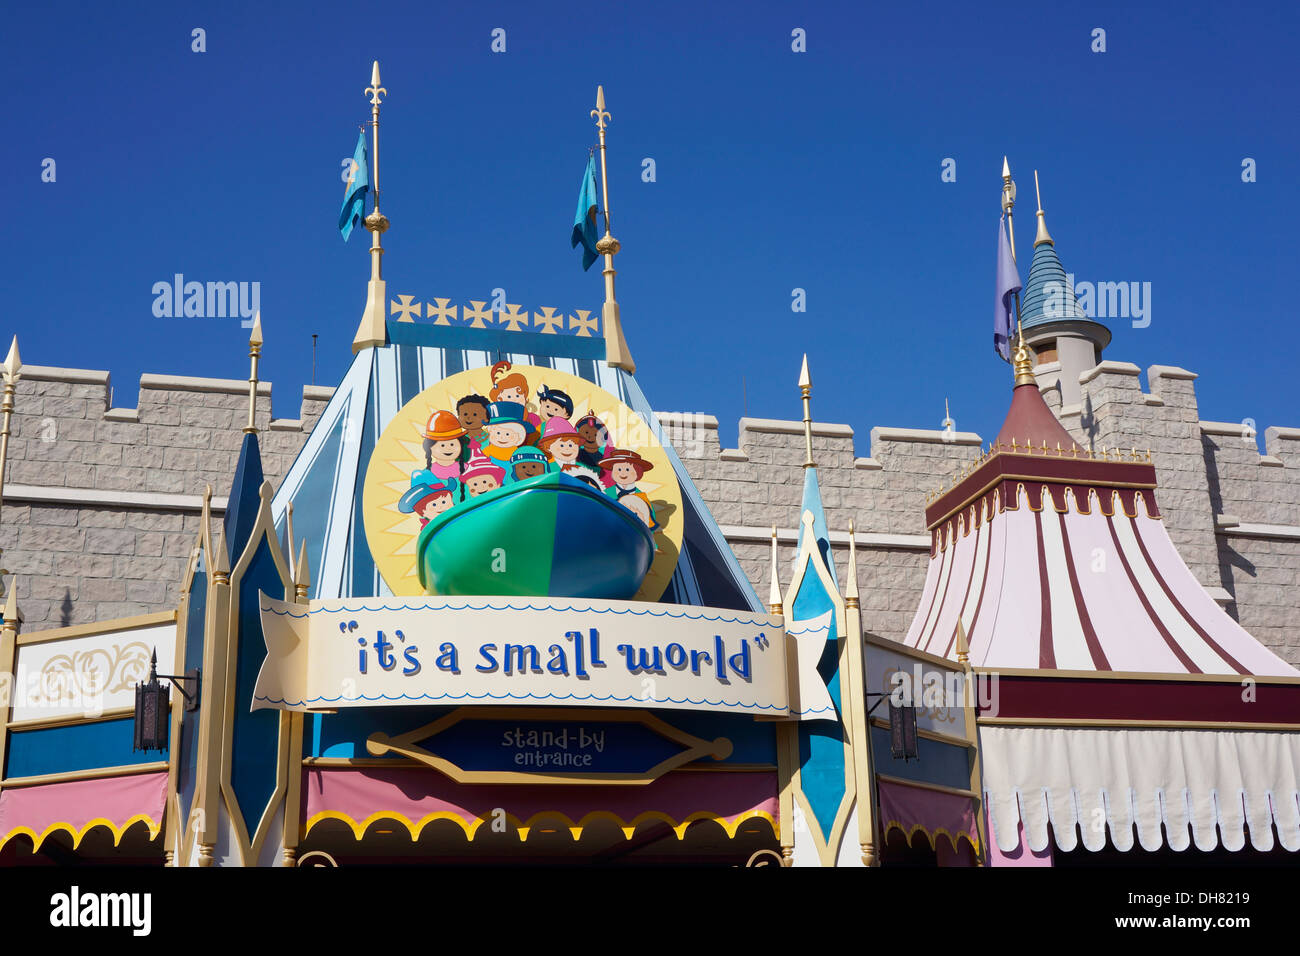 It's A Small World, 'it's a small world', Magic Kingdom, Disney World Resort, Orlando Florida Stock Photo